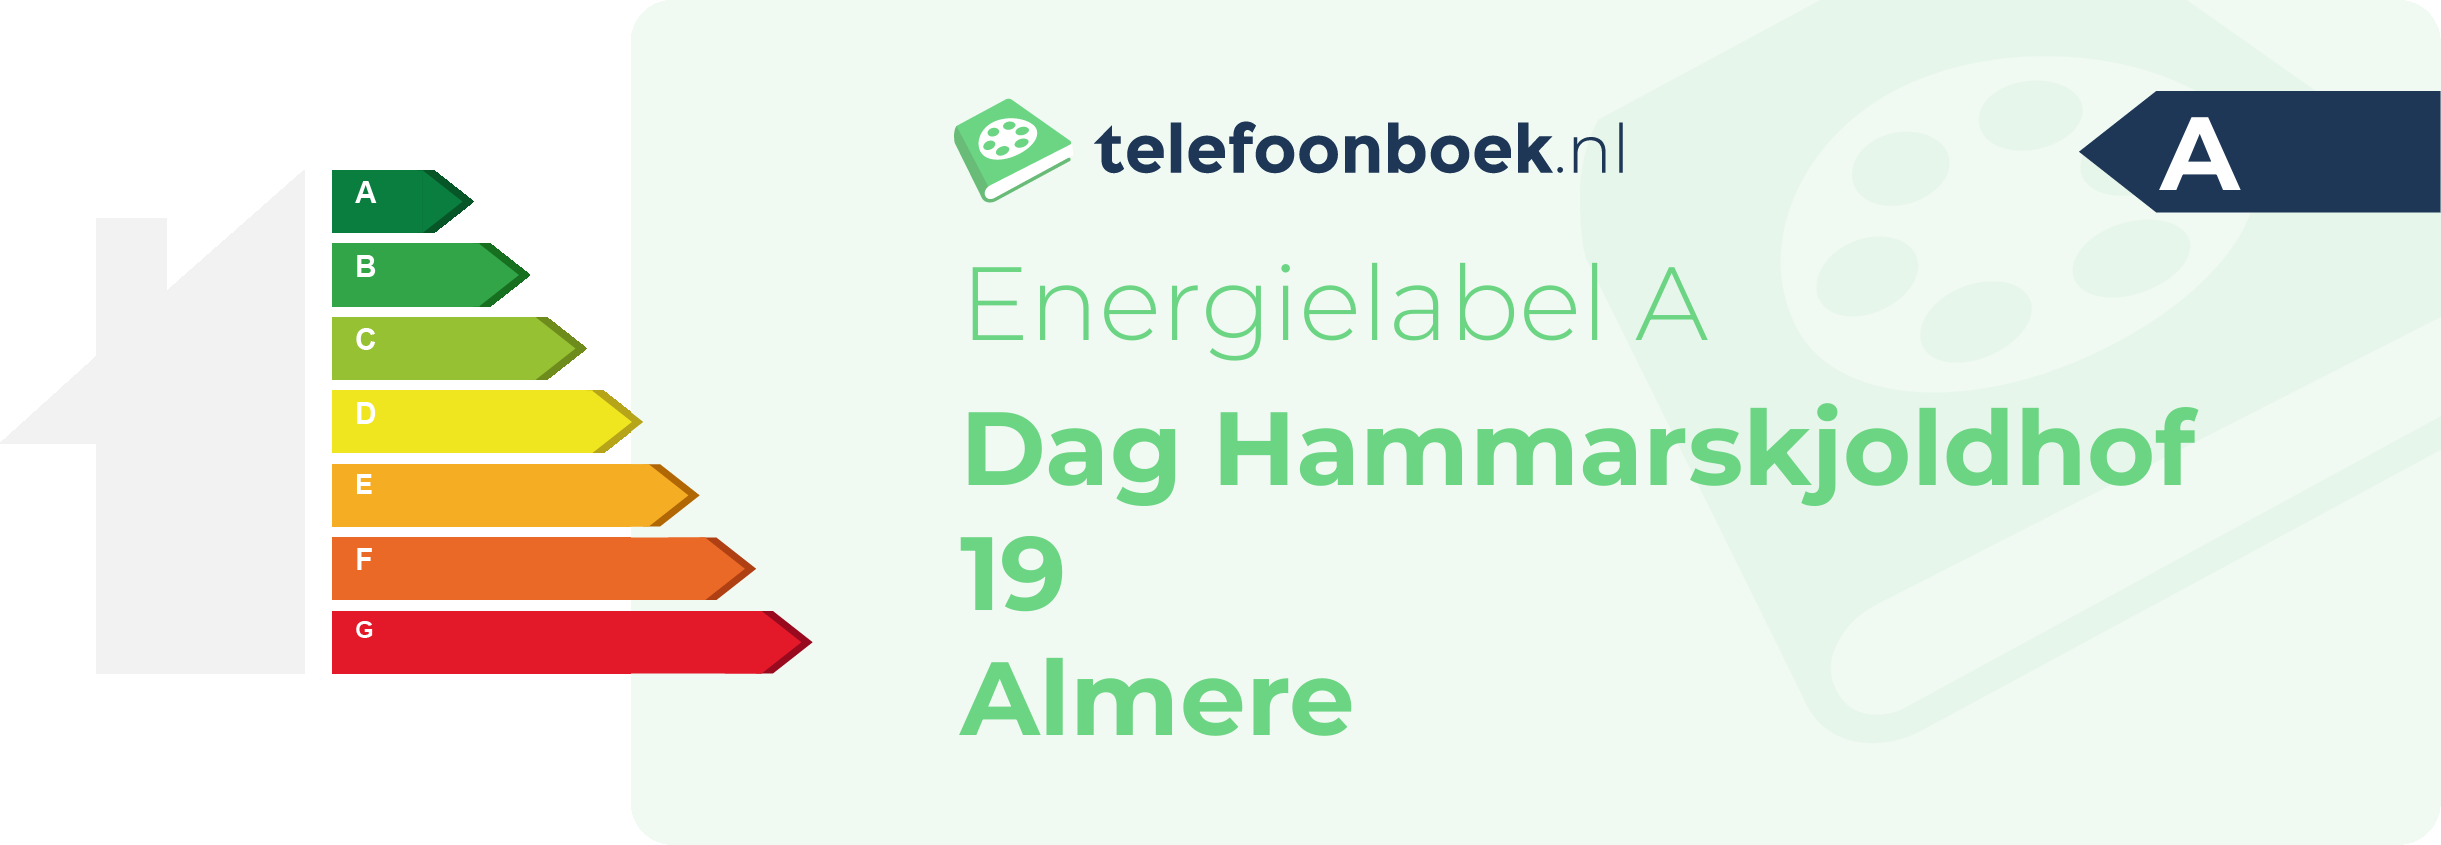 Energielabel Dag Hammarskjoldhof 19 Almere